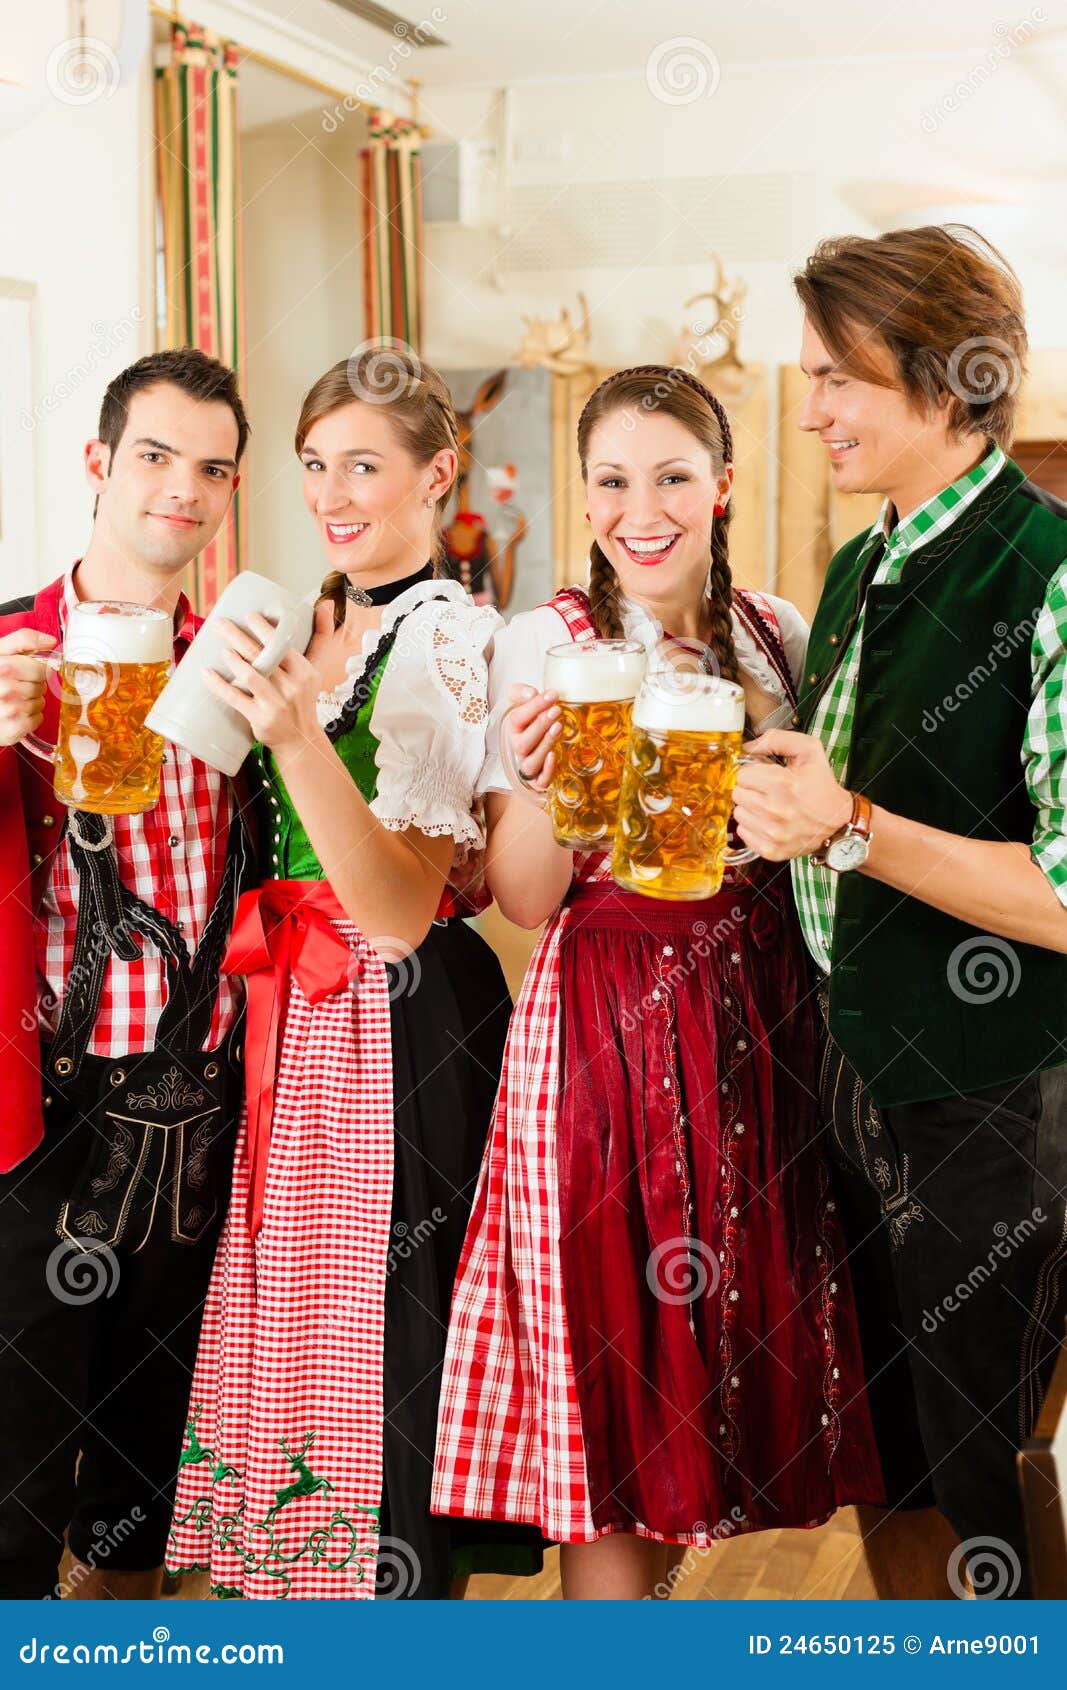 Bavaria dating